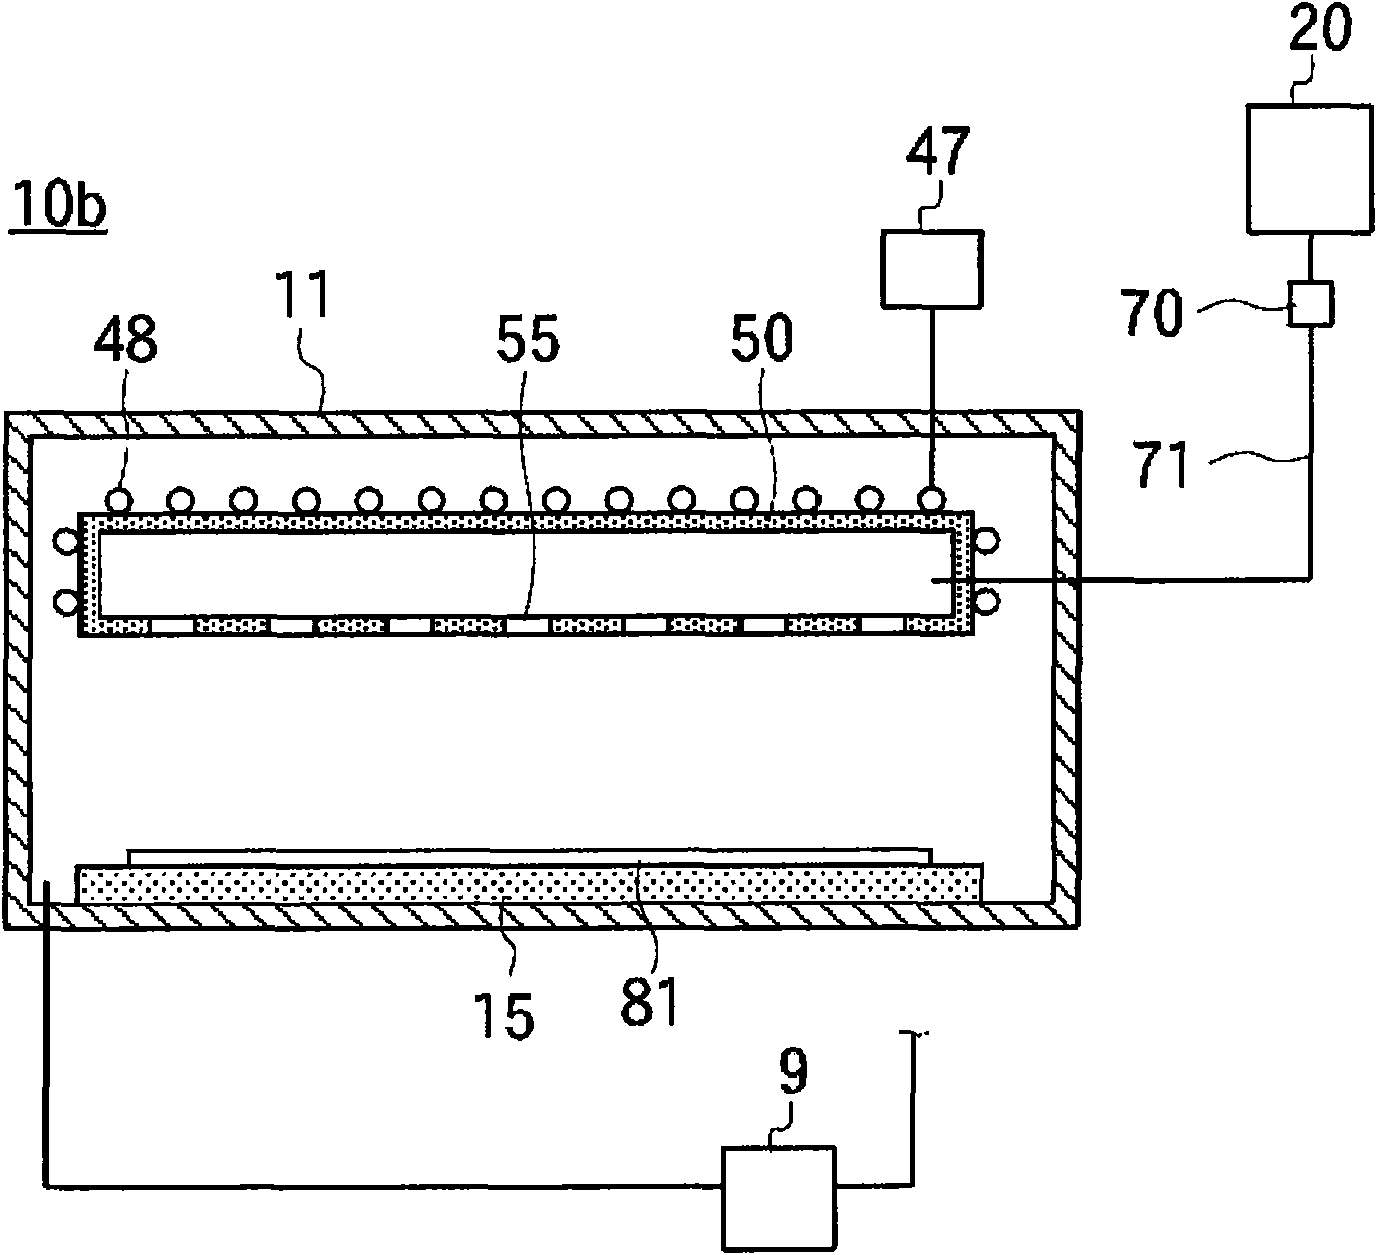 Vapor generator and vapor deposition apparatus